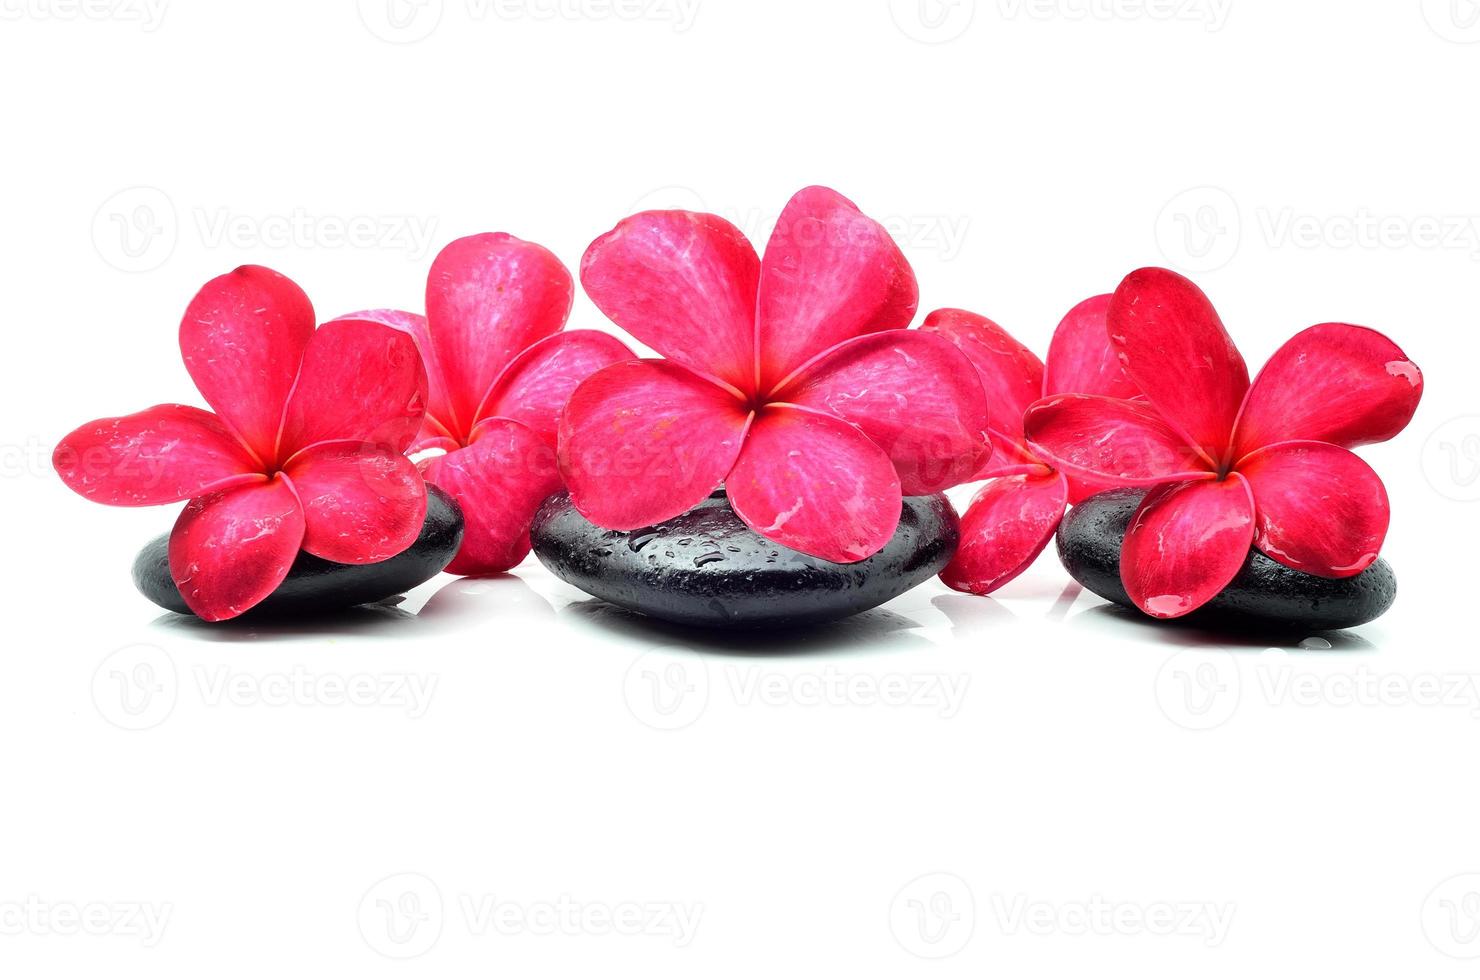 pedras zen com flor de frangipani foto